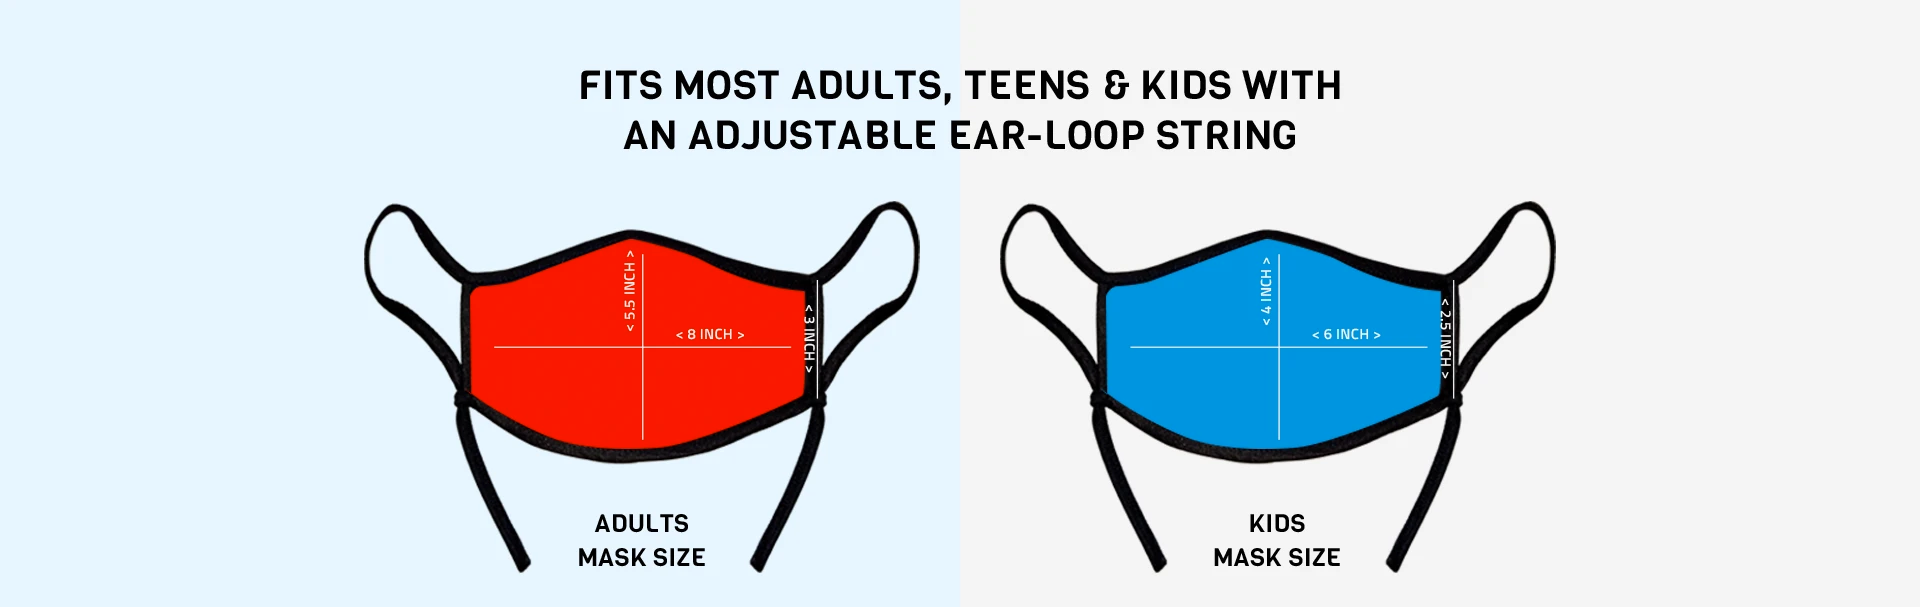 adults and kids mask size